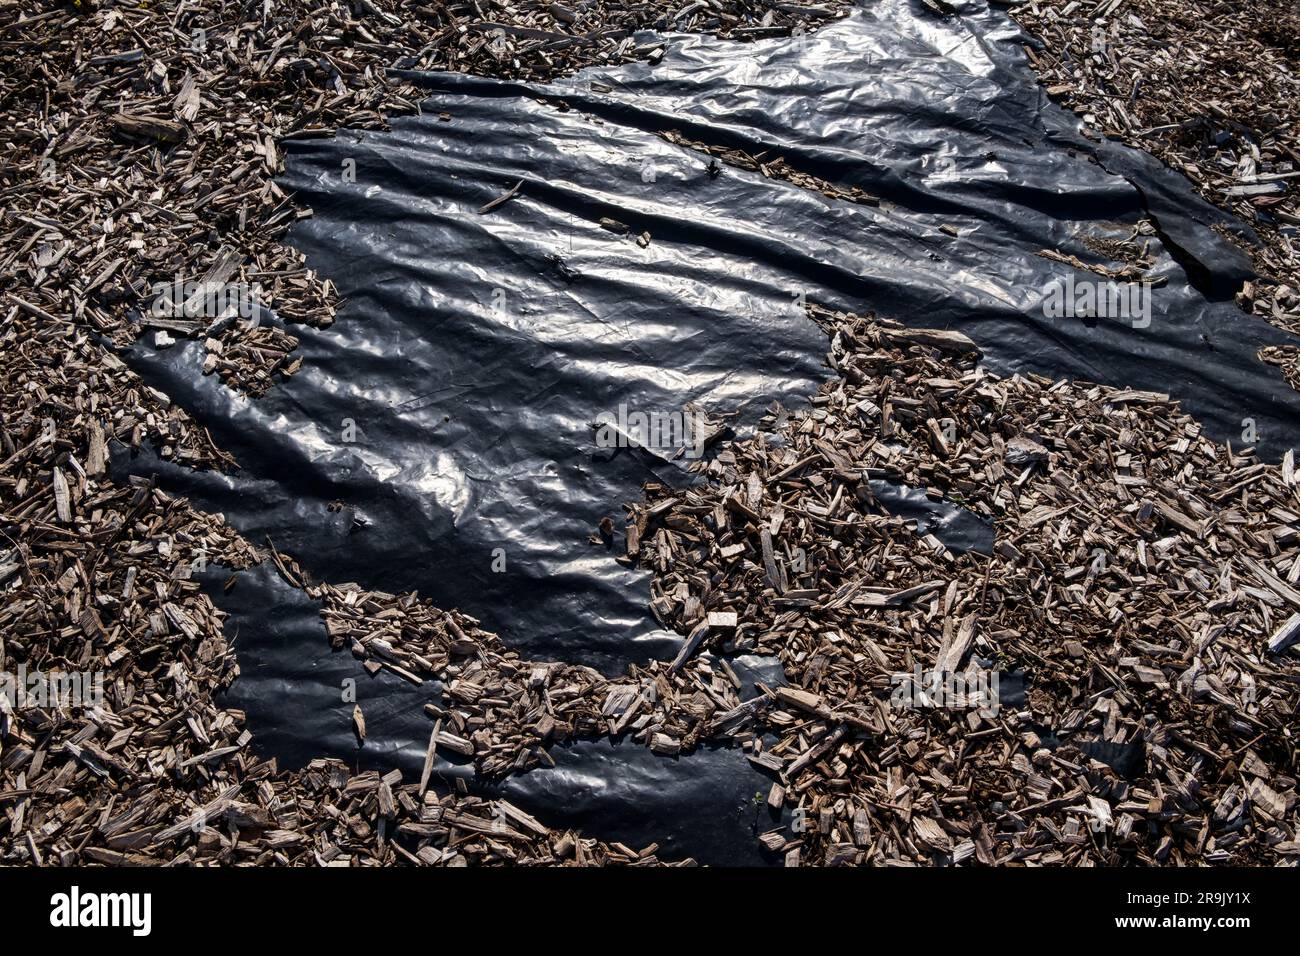 Landscaping woodchips covering black plastic tarpaulin. Stock Photo